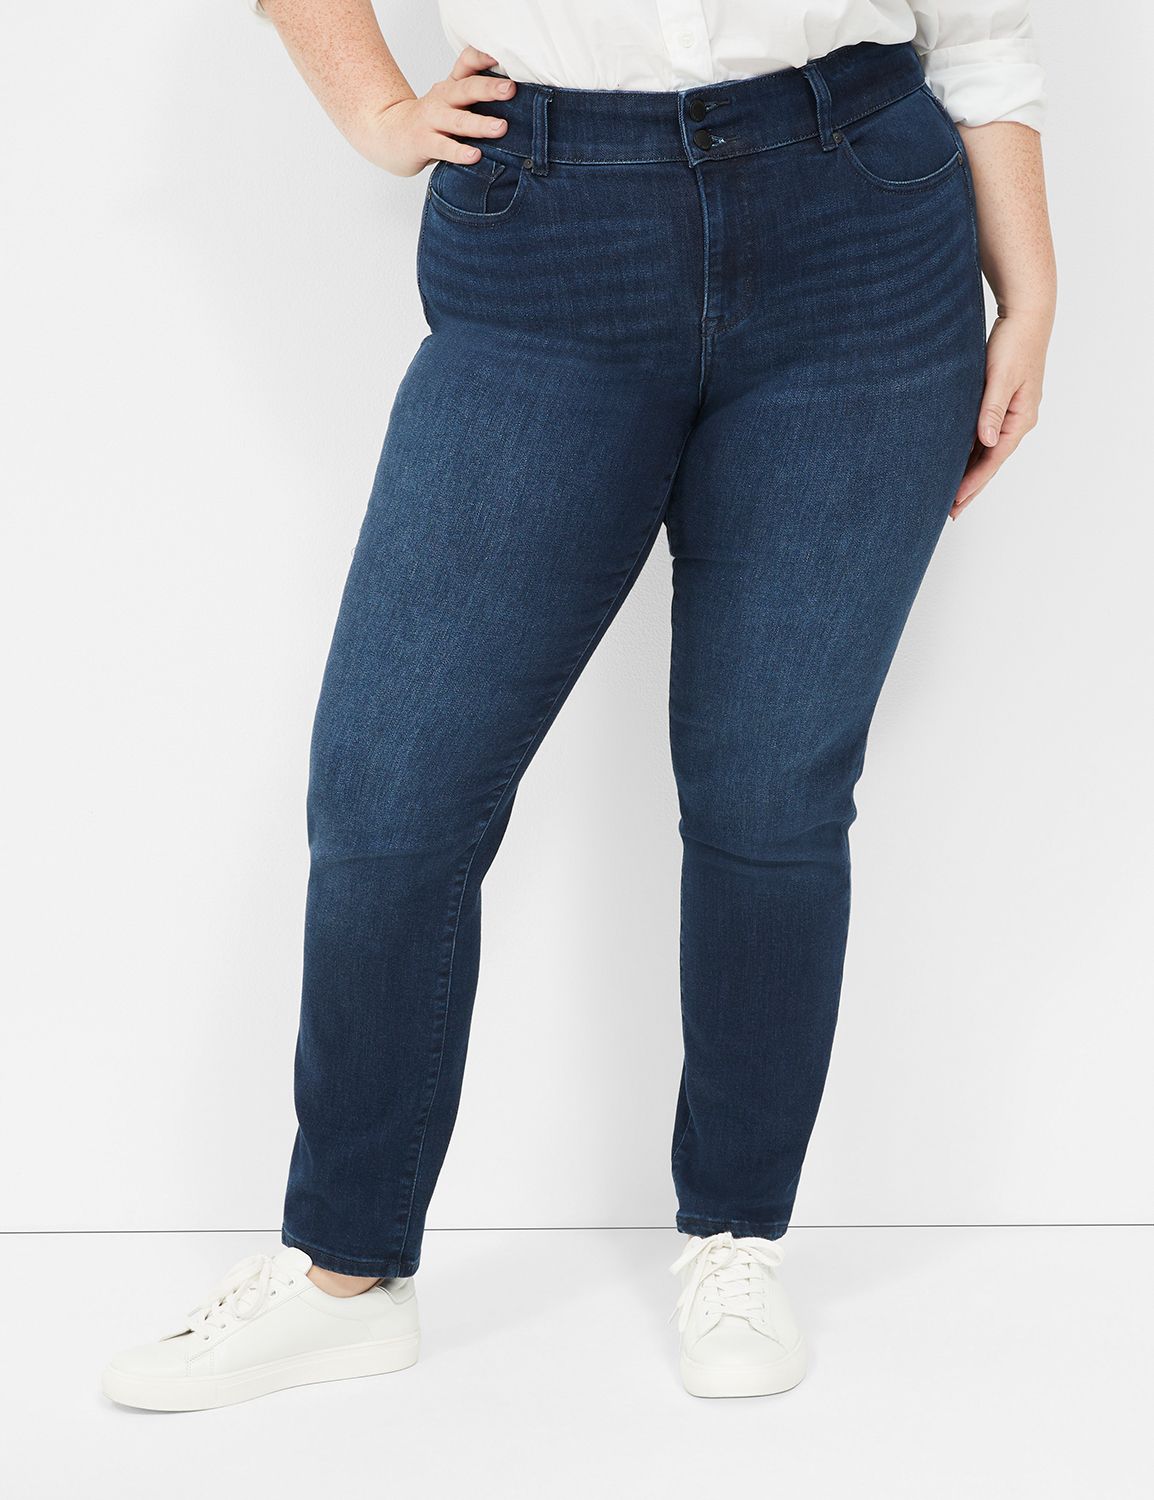 Women's Plus Size Straight Leg Jeans